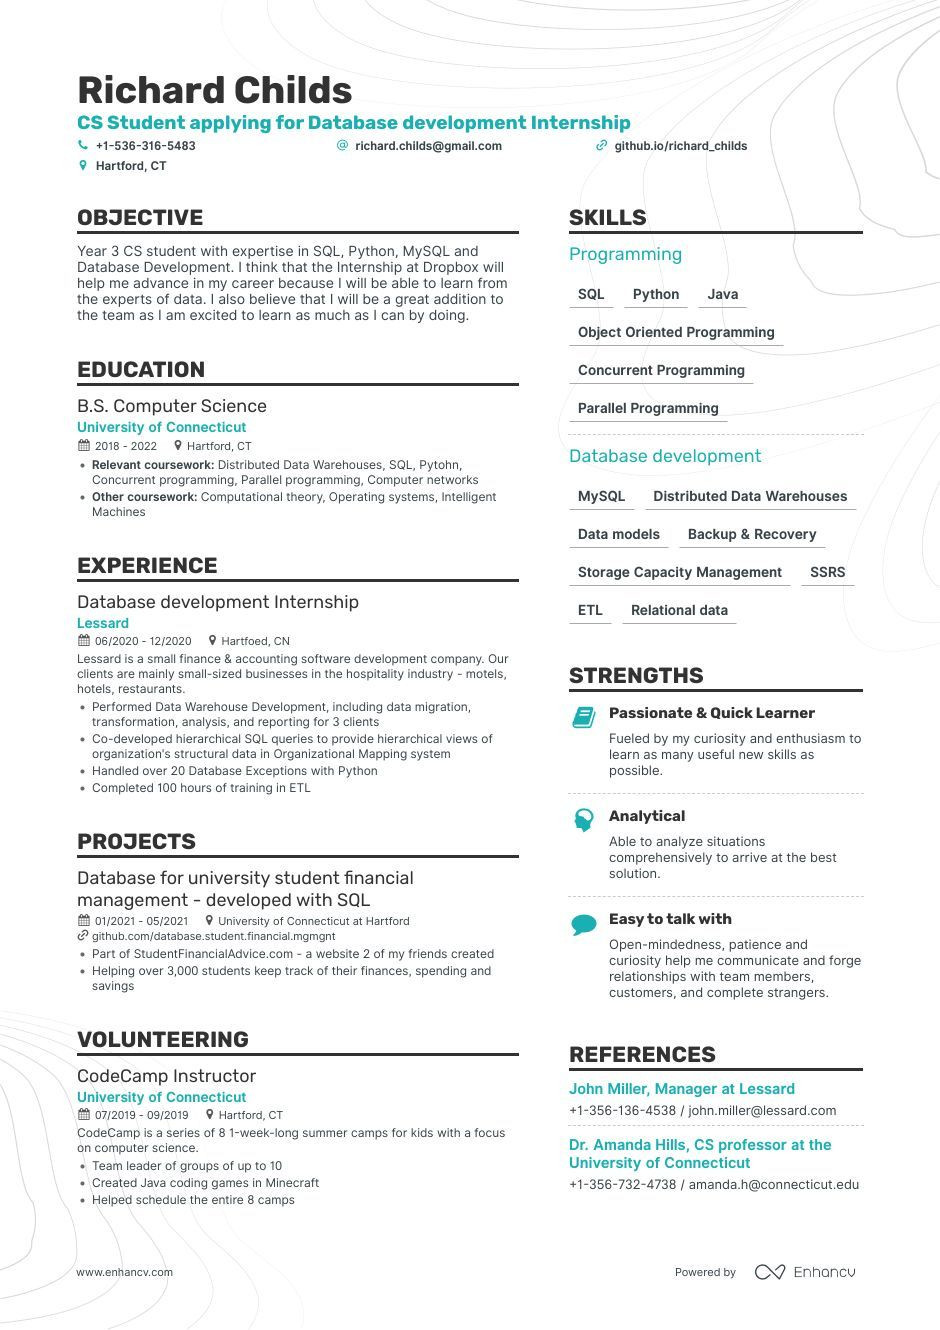 Sample Resume Of Fresh Graduate Computer Science Computer Science Resume Examples & Guide for 2022 (layout, Skills …